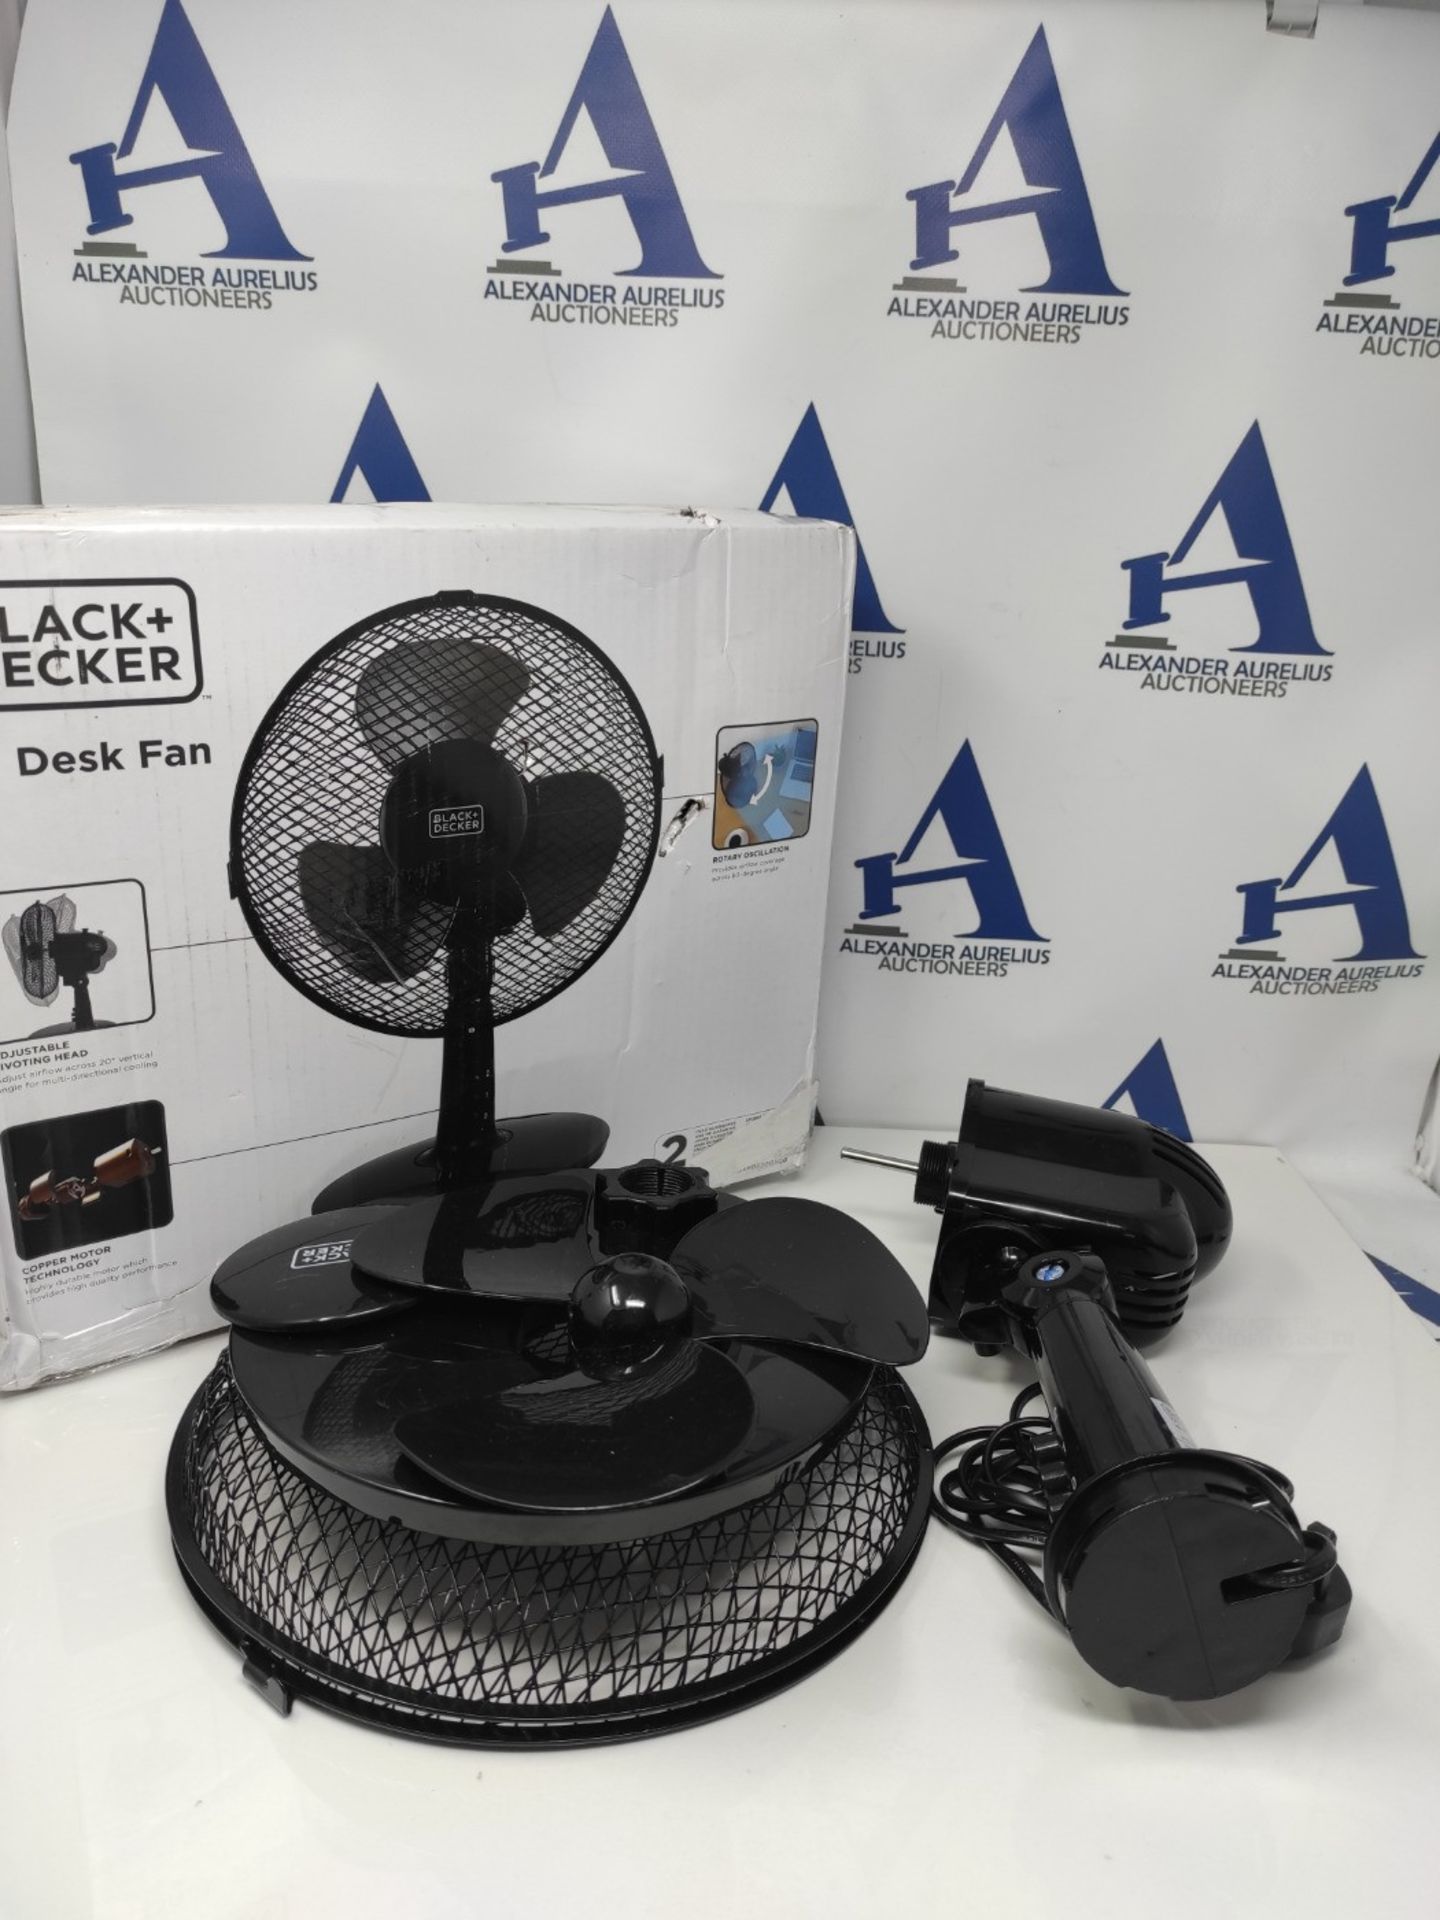 BLACK+DECKER BXFD52003GB Desk Fan with 2 Speeds, Rotary Oscillation, 9 Inch, 20W, Blac